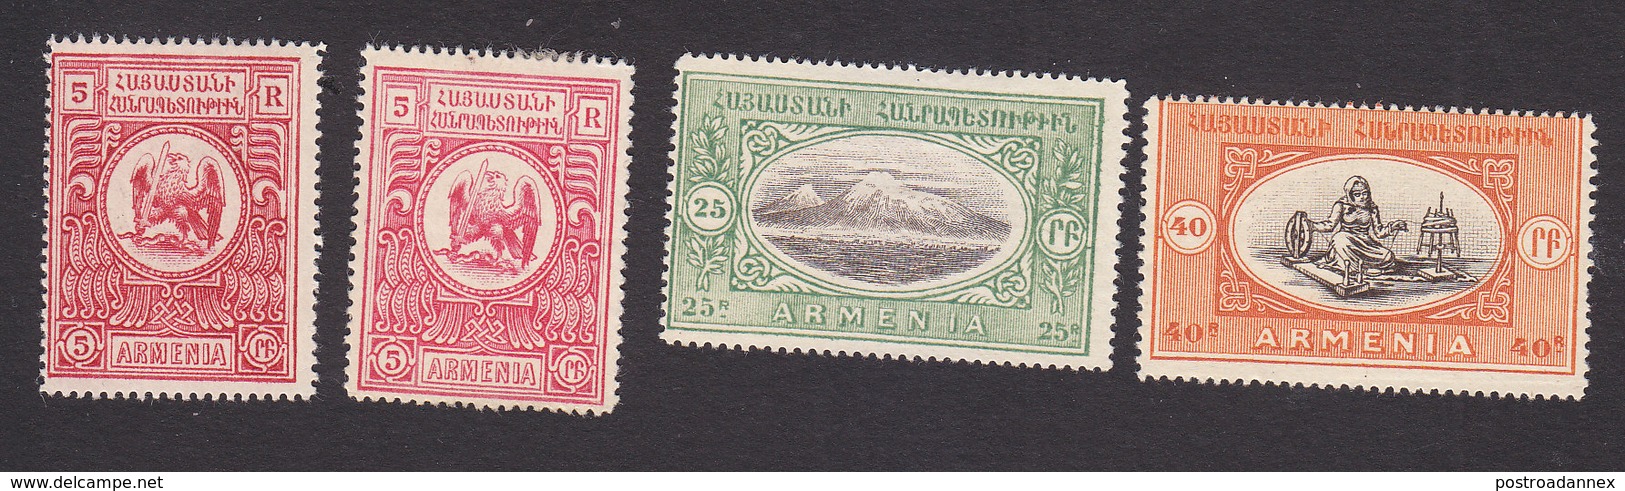 Armenia, Scott #Not Listed, Mint Hinged, Scenes Of Armenia, Issued 1920 - Armenia